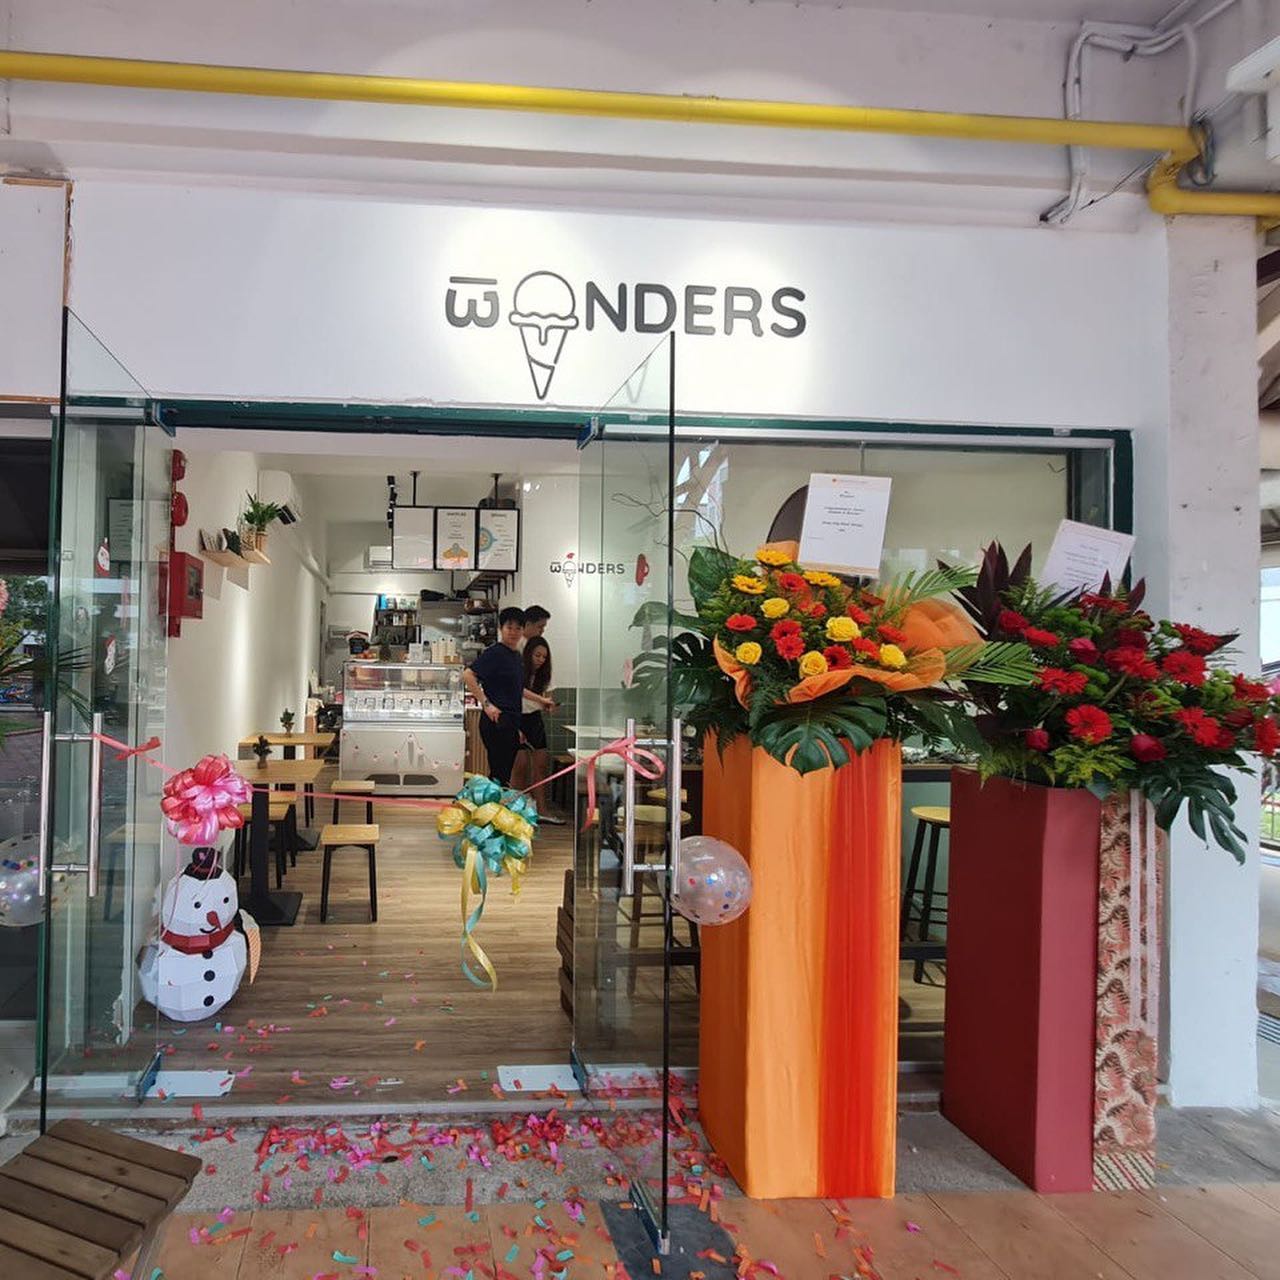 Wonders - storefront